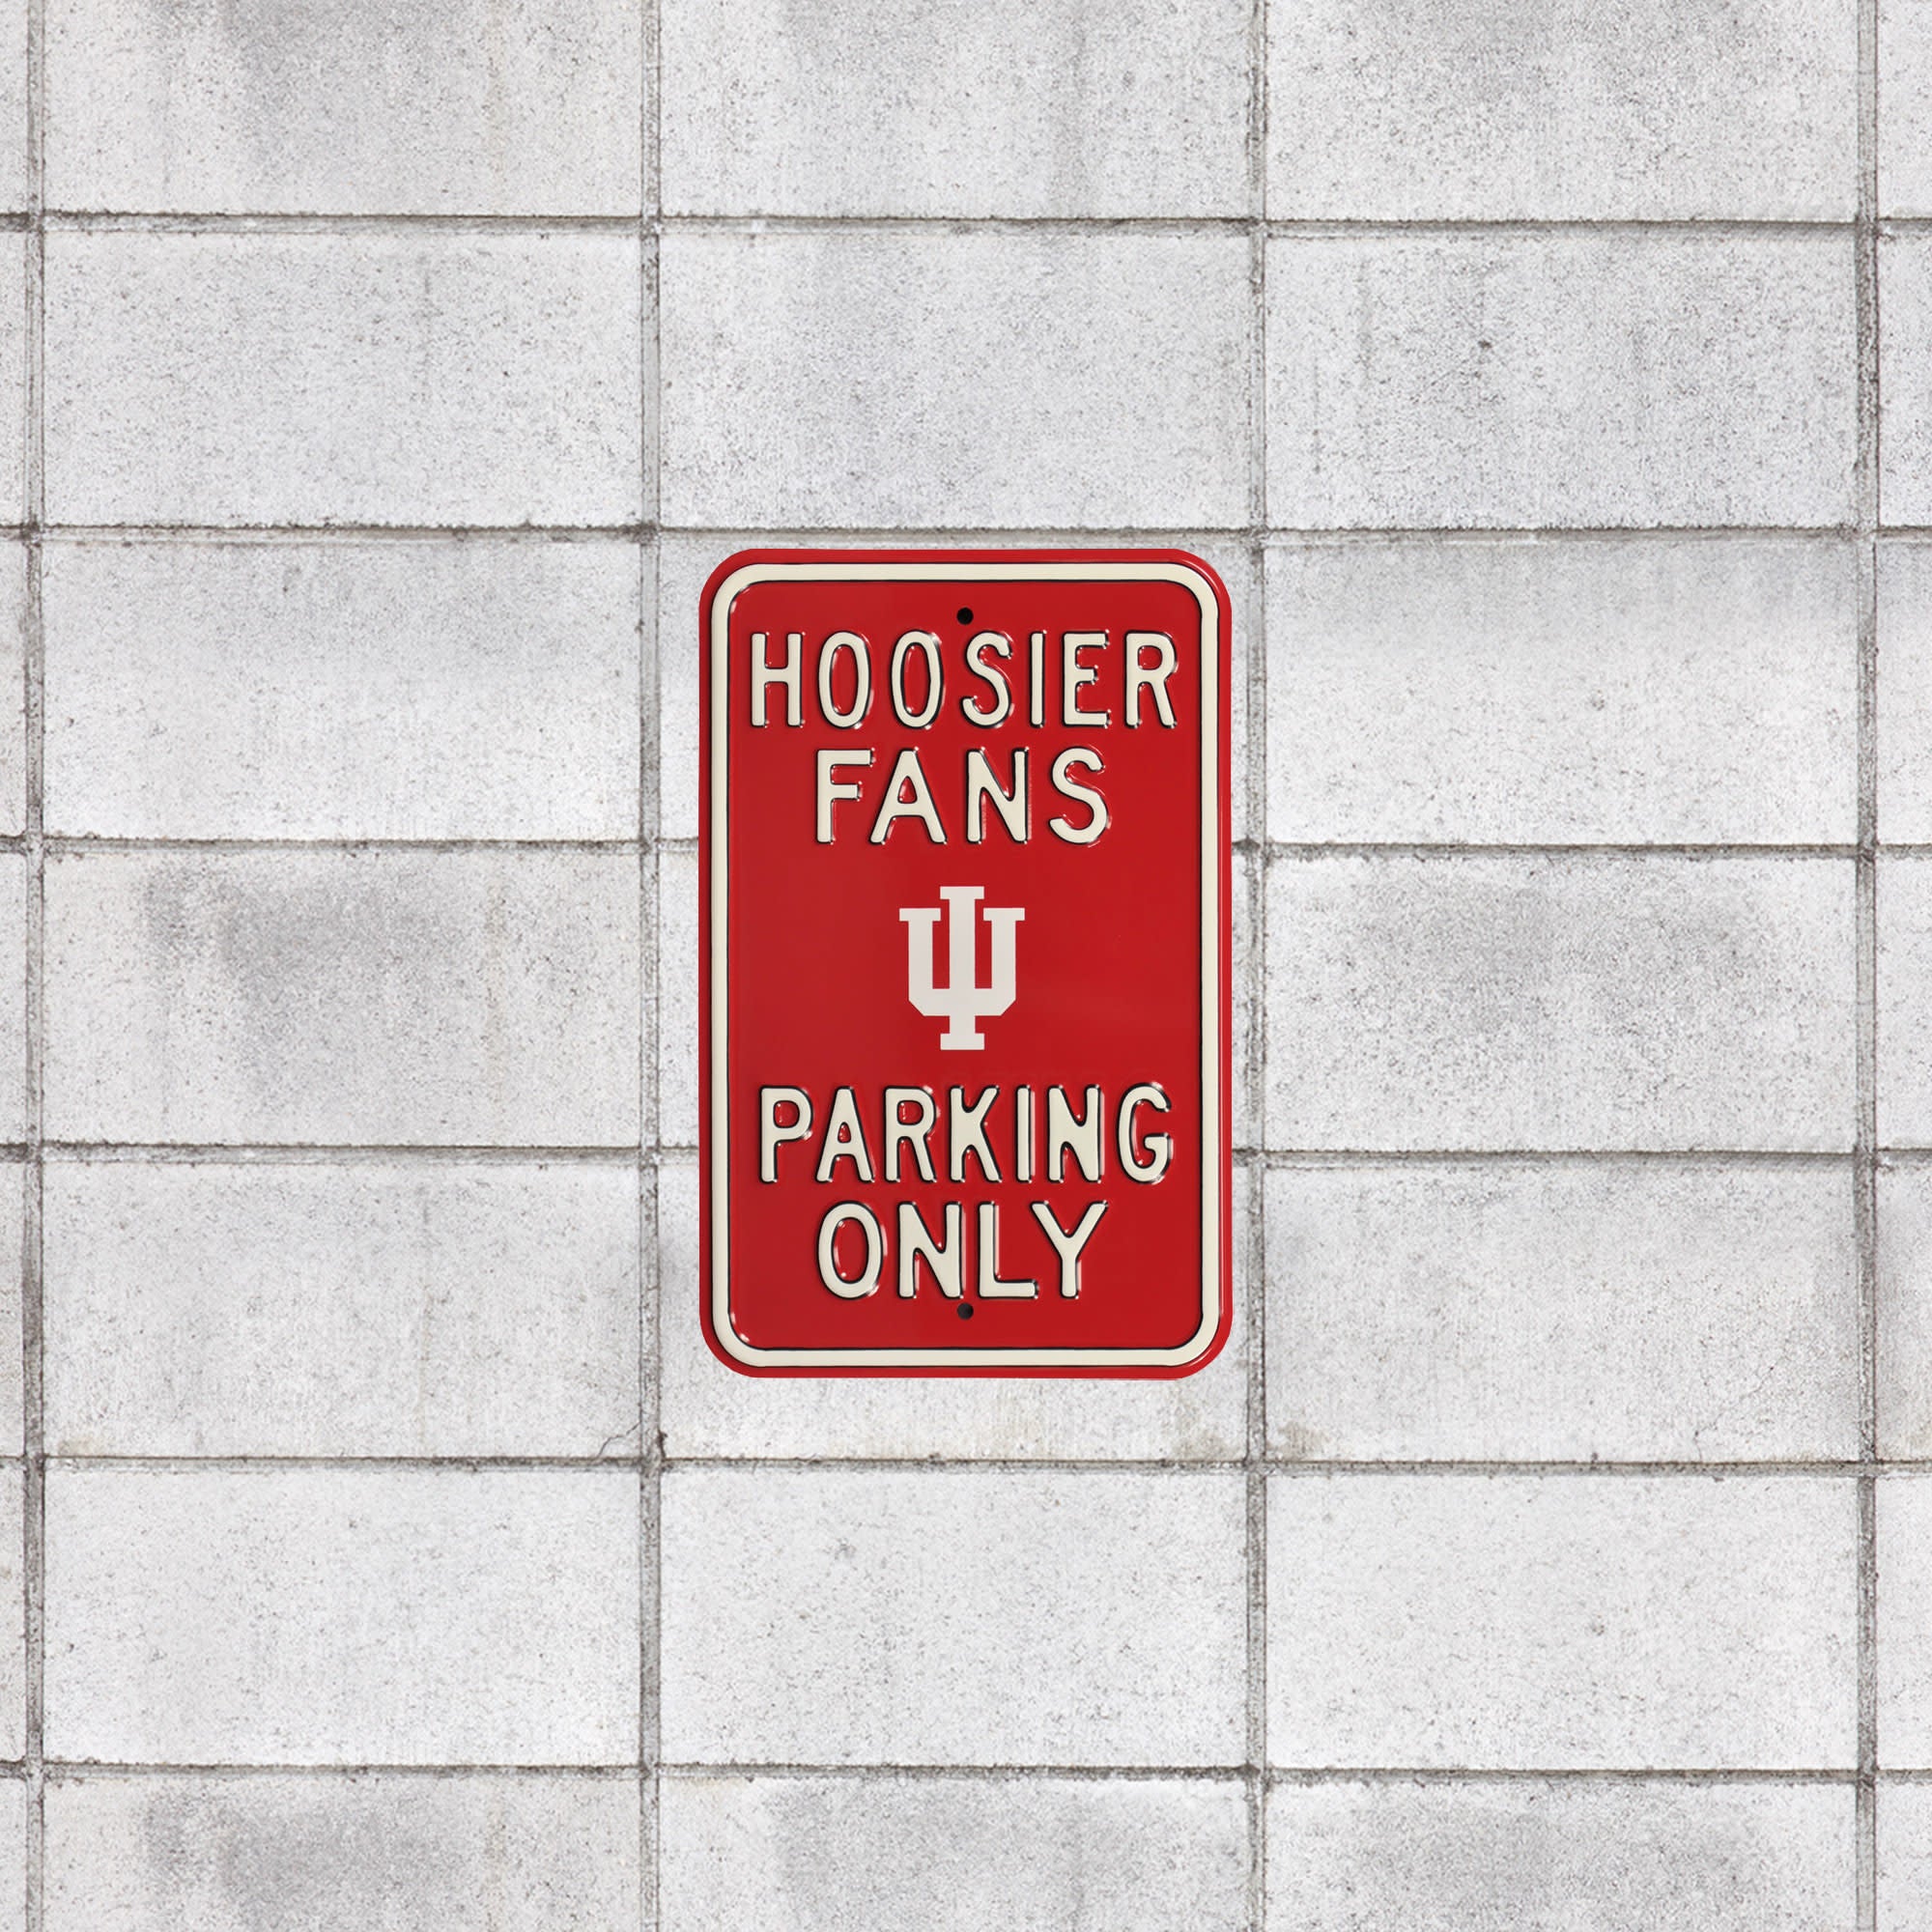 Indiana Hoosiers: Hoosier Fans Parking - Officially Licensed Metal Street Sign 18.0"W x 12.0"H by Fathead | 100% Steel